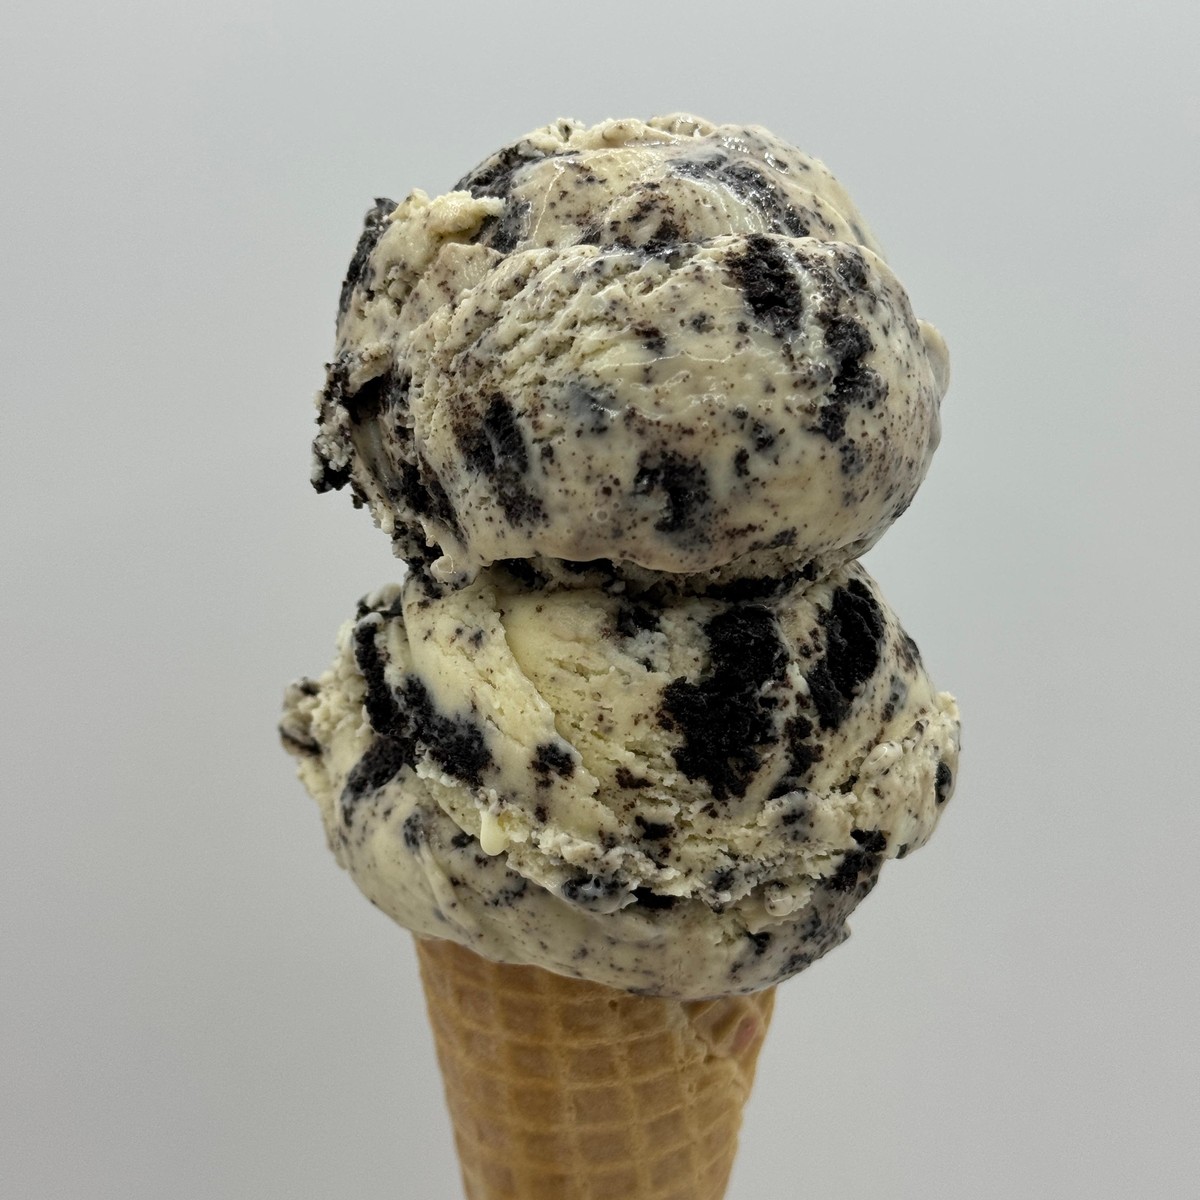 Gerald's Ice Cream & Affogatos : Fresh made every day in Virginia Beach